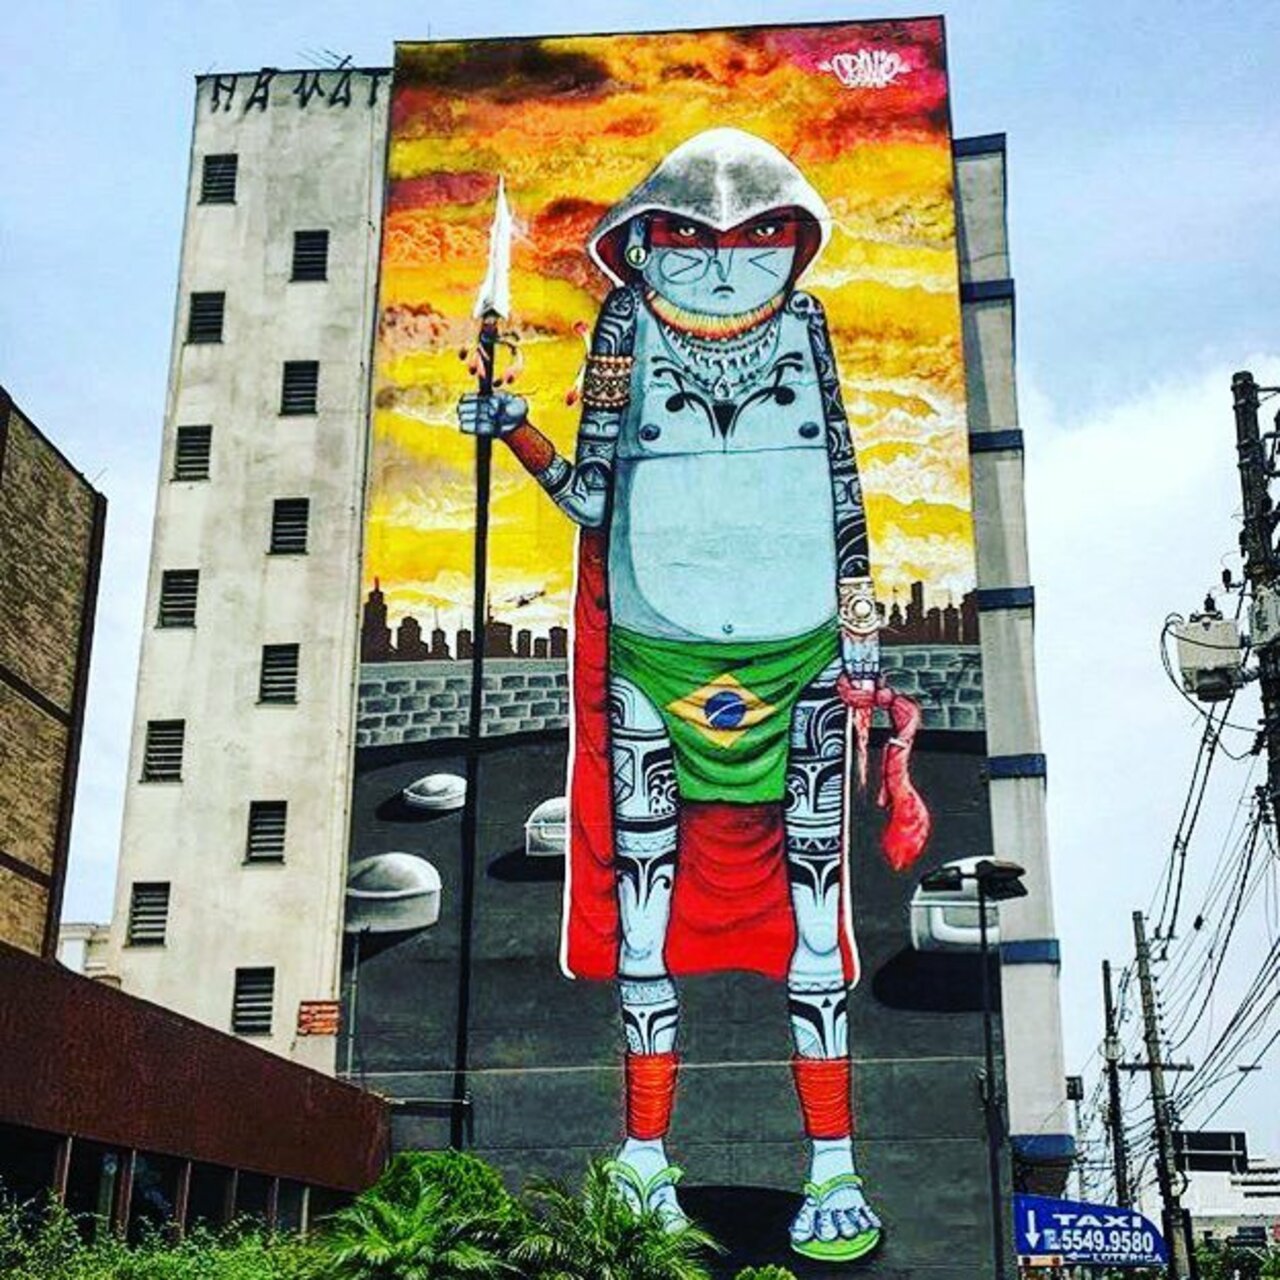 A new mural by Cranio @cranioartes in Sampa, Brazil.  #streetart #graffiti #art #urban #urbanart #museum #artsy #ar… https://t.co/AGPMmGpGw4